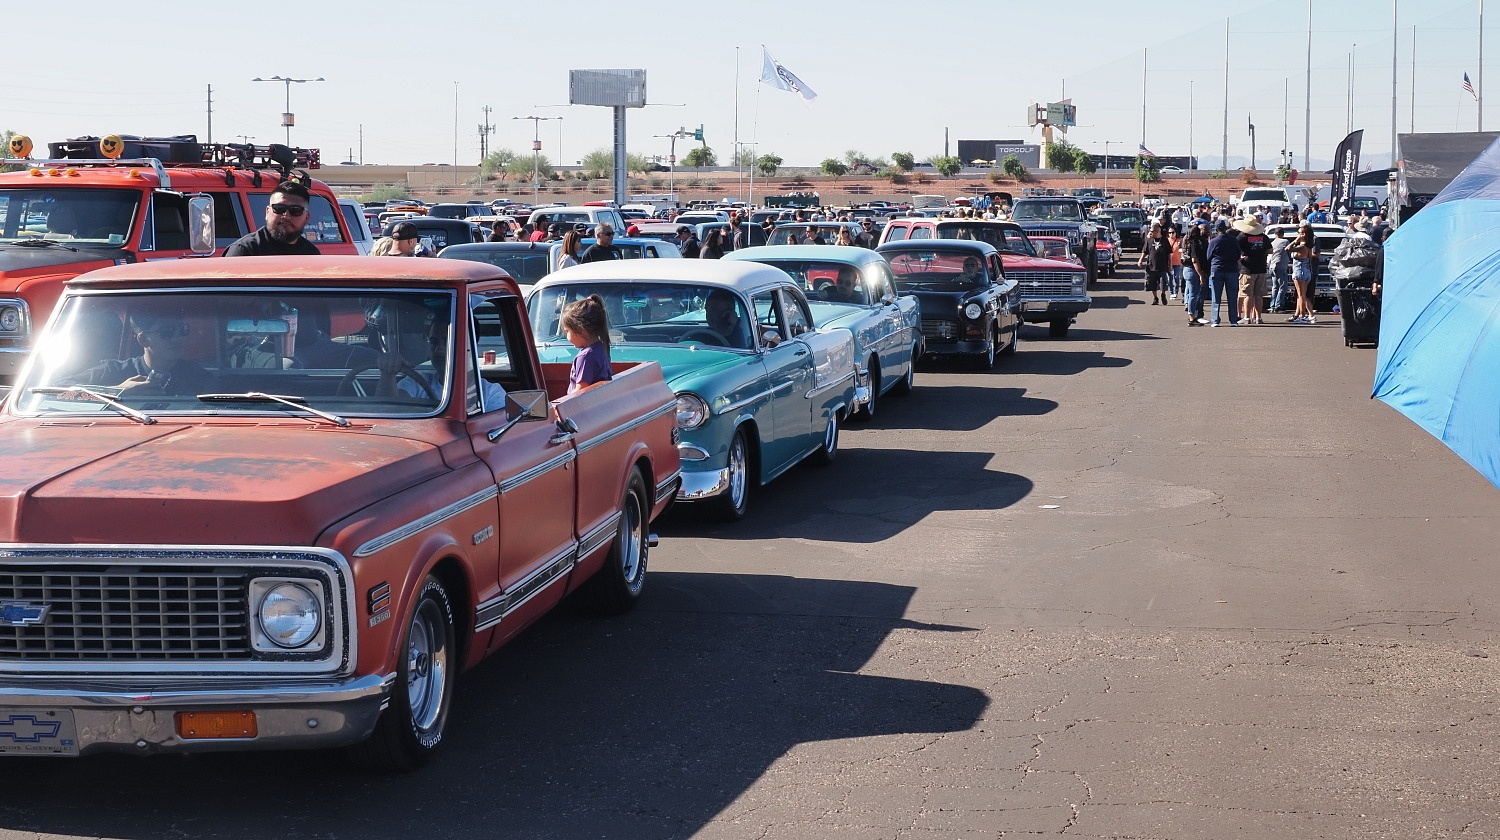 Vintage Chevy parade.